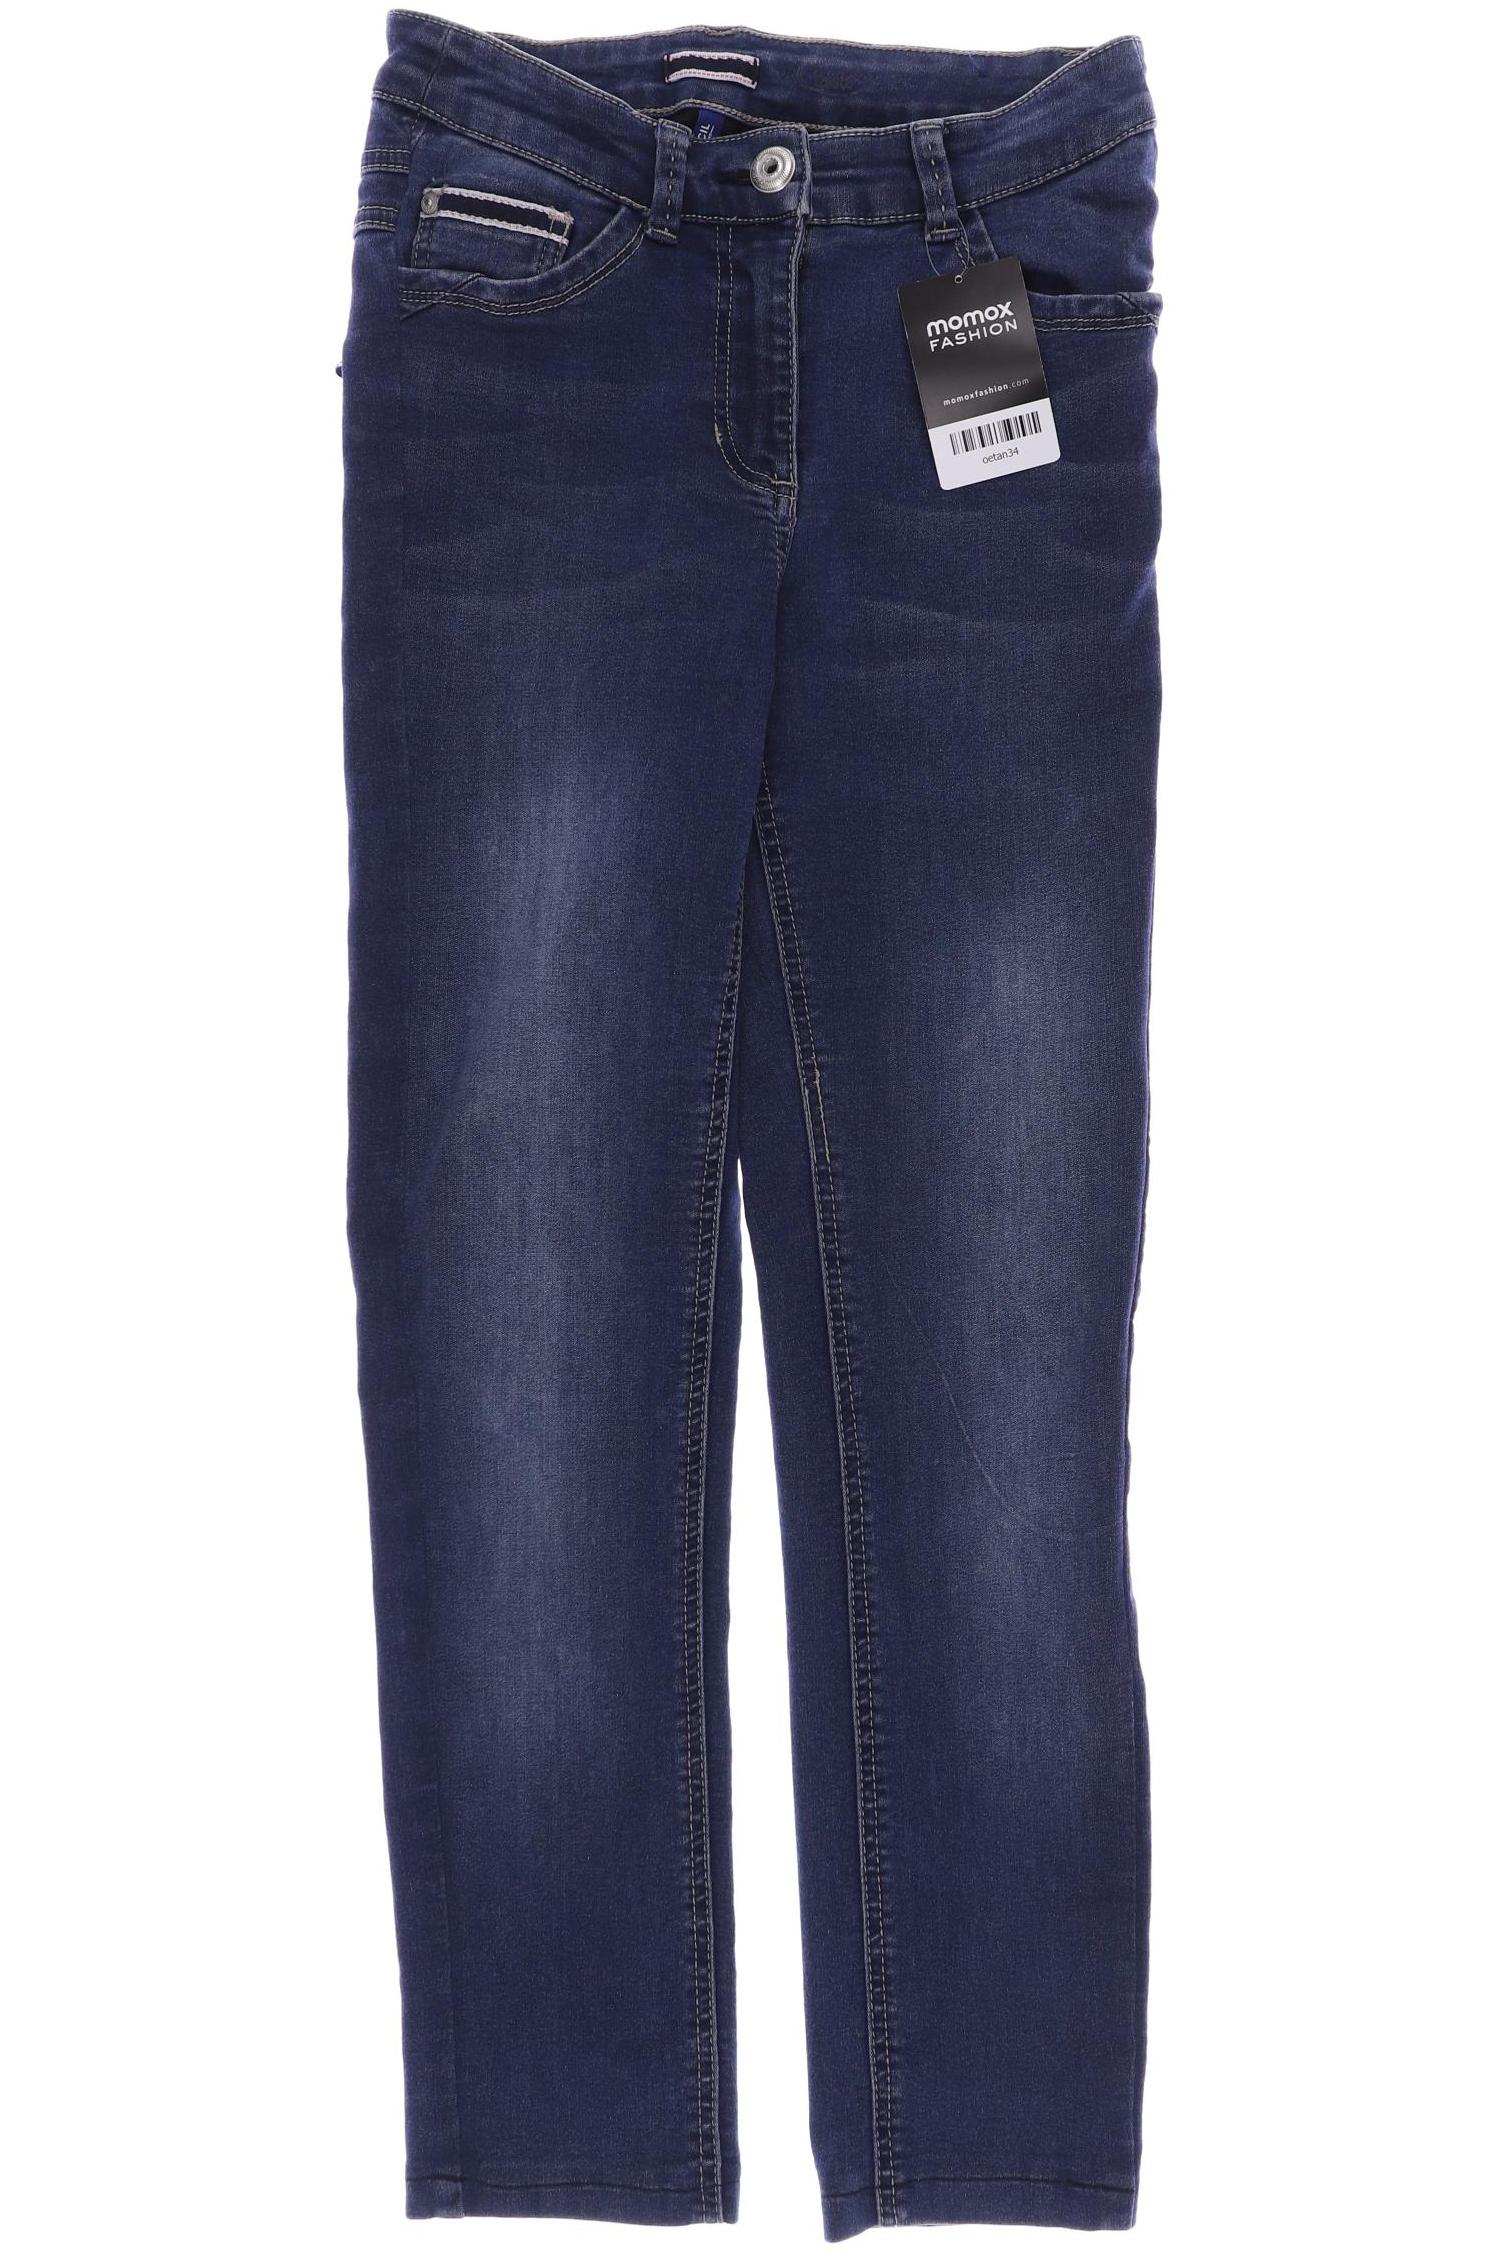 Cecil Damen Jeans, blau, Gr. 36 von cecil